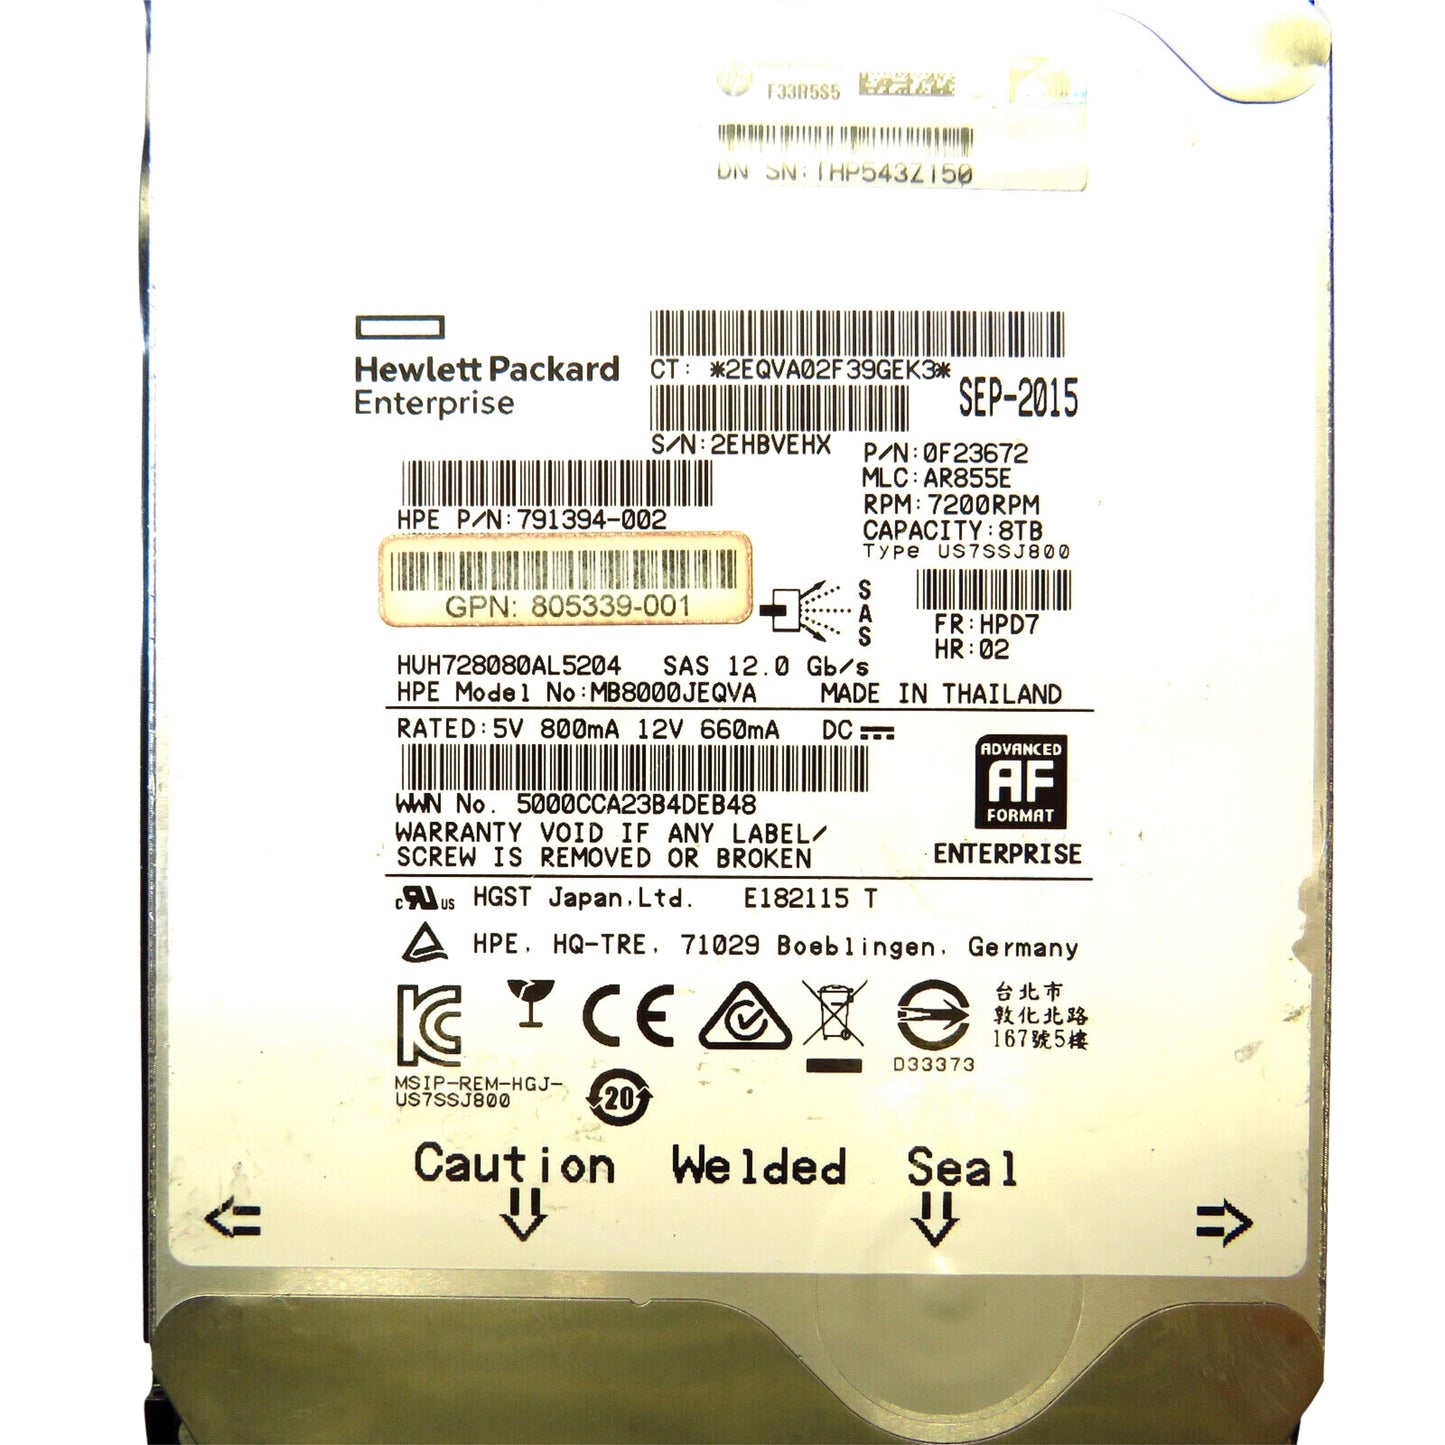 HP 805344-001 3.5" 8TB 7200RPM SAS 12Gb/s Hard Disk Drive (HDD), Silver (Refurbished)